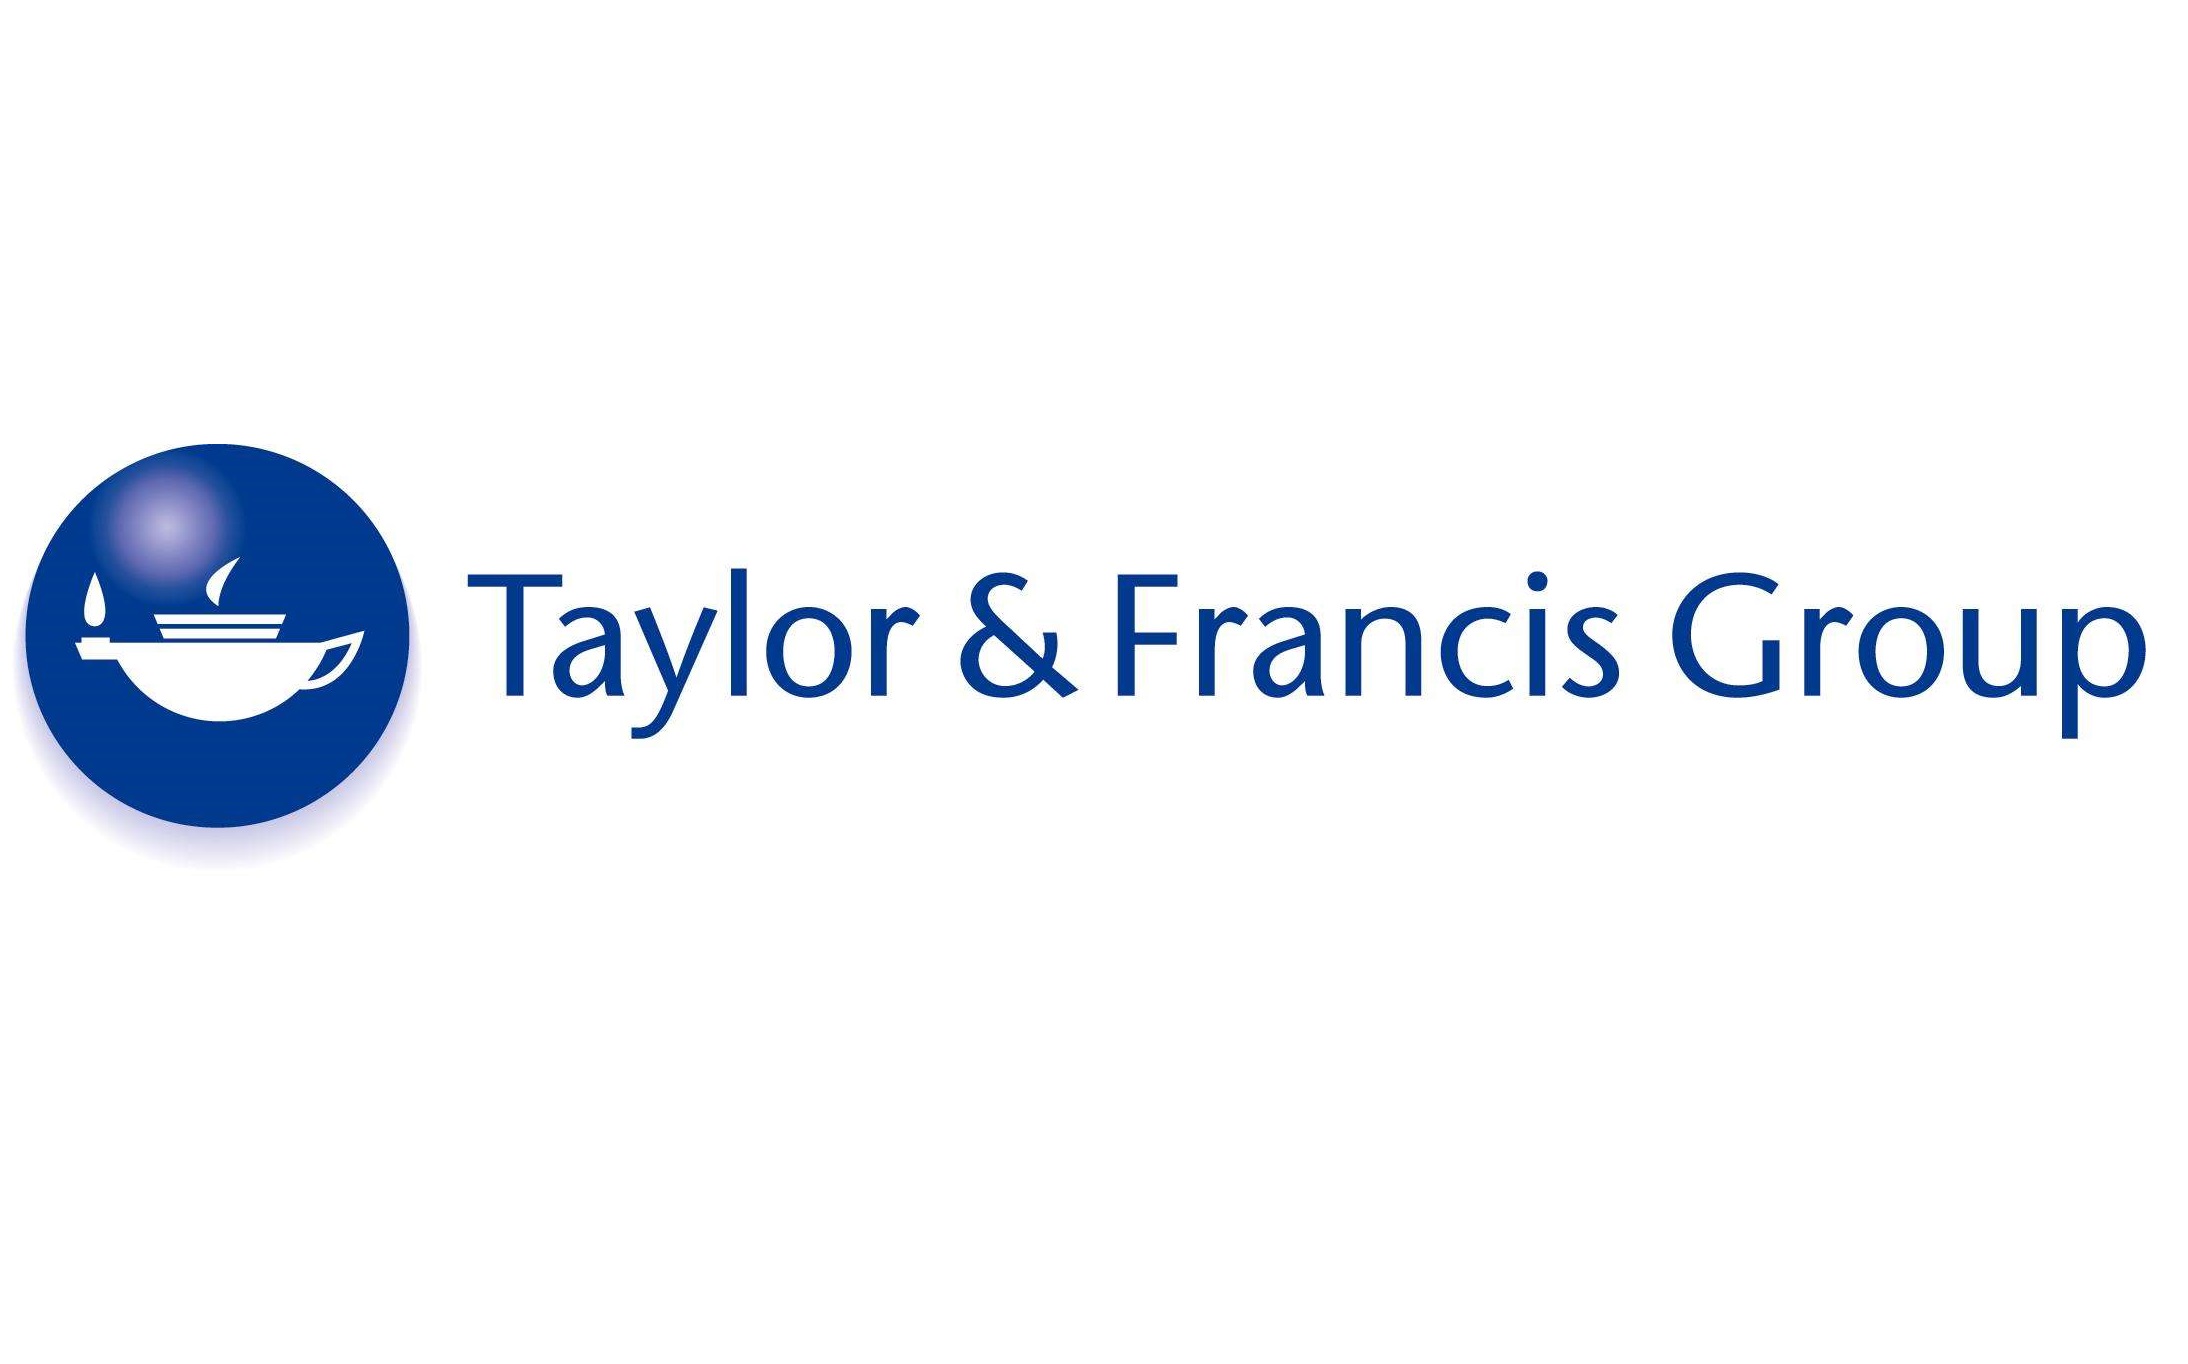 Taylor & Francis Group